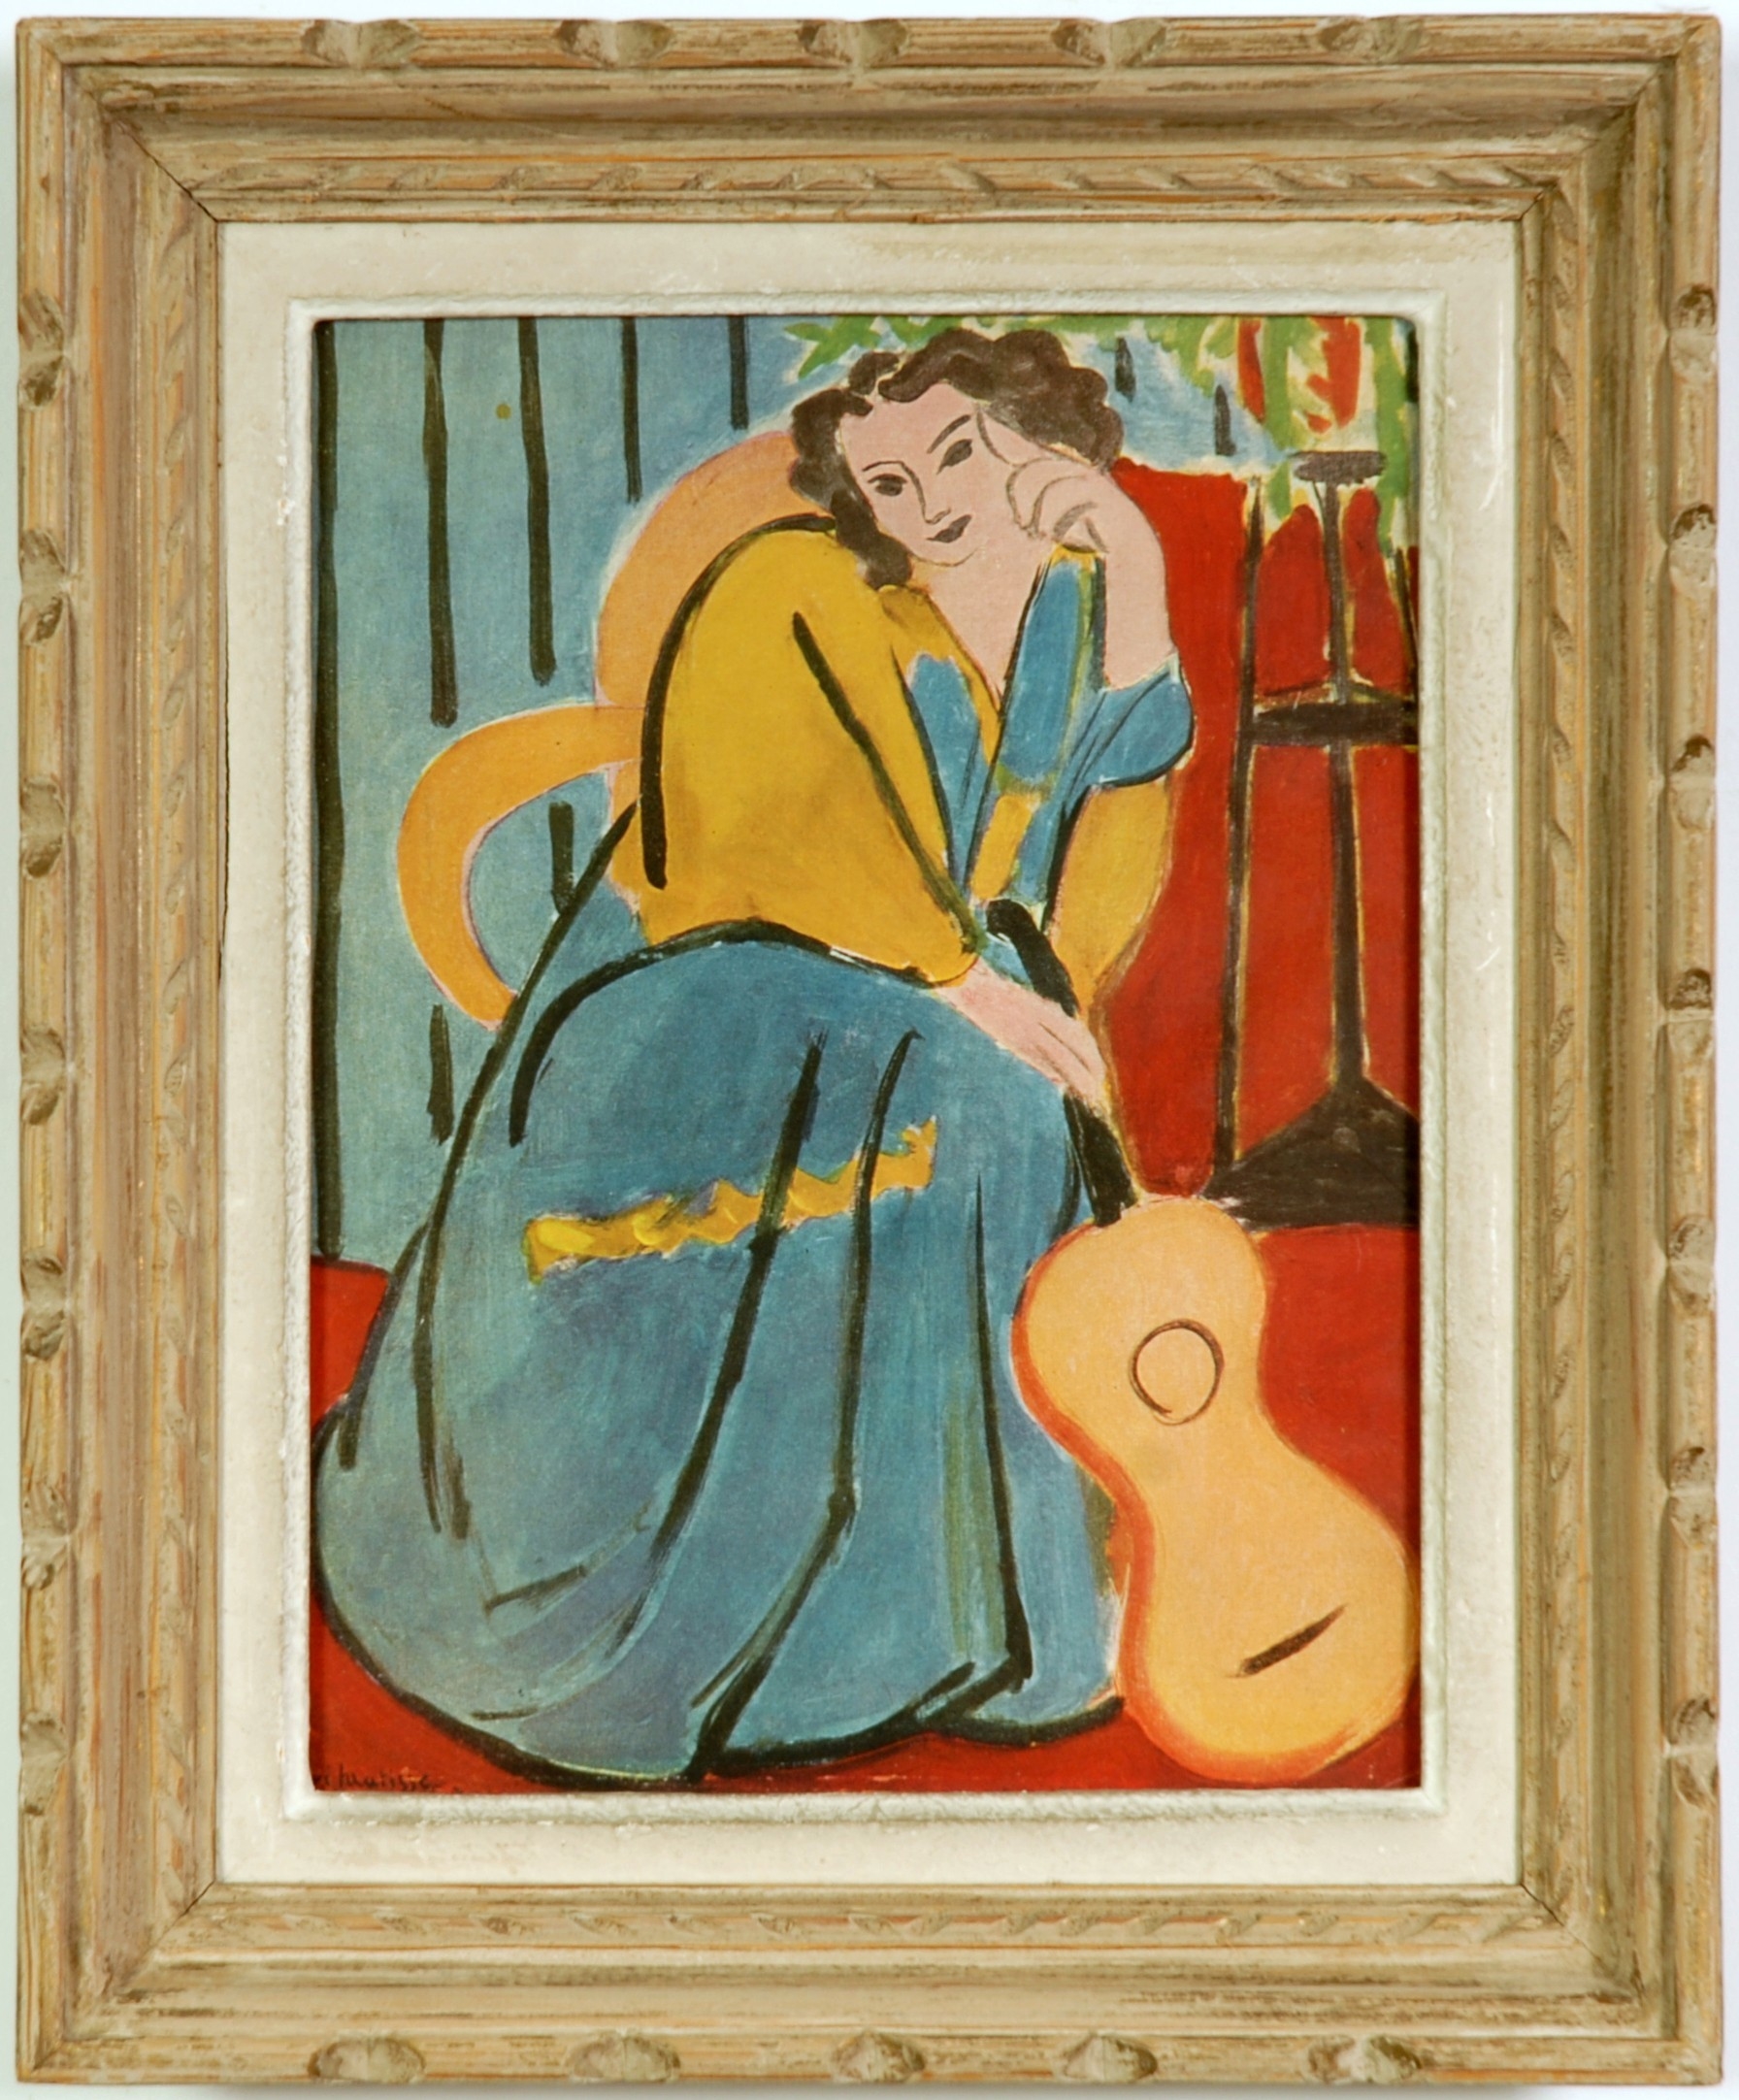 Femme Assise et Guitare by Henri Matisse